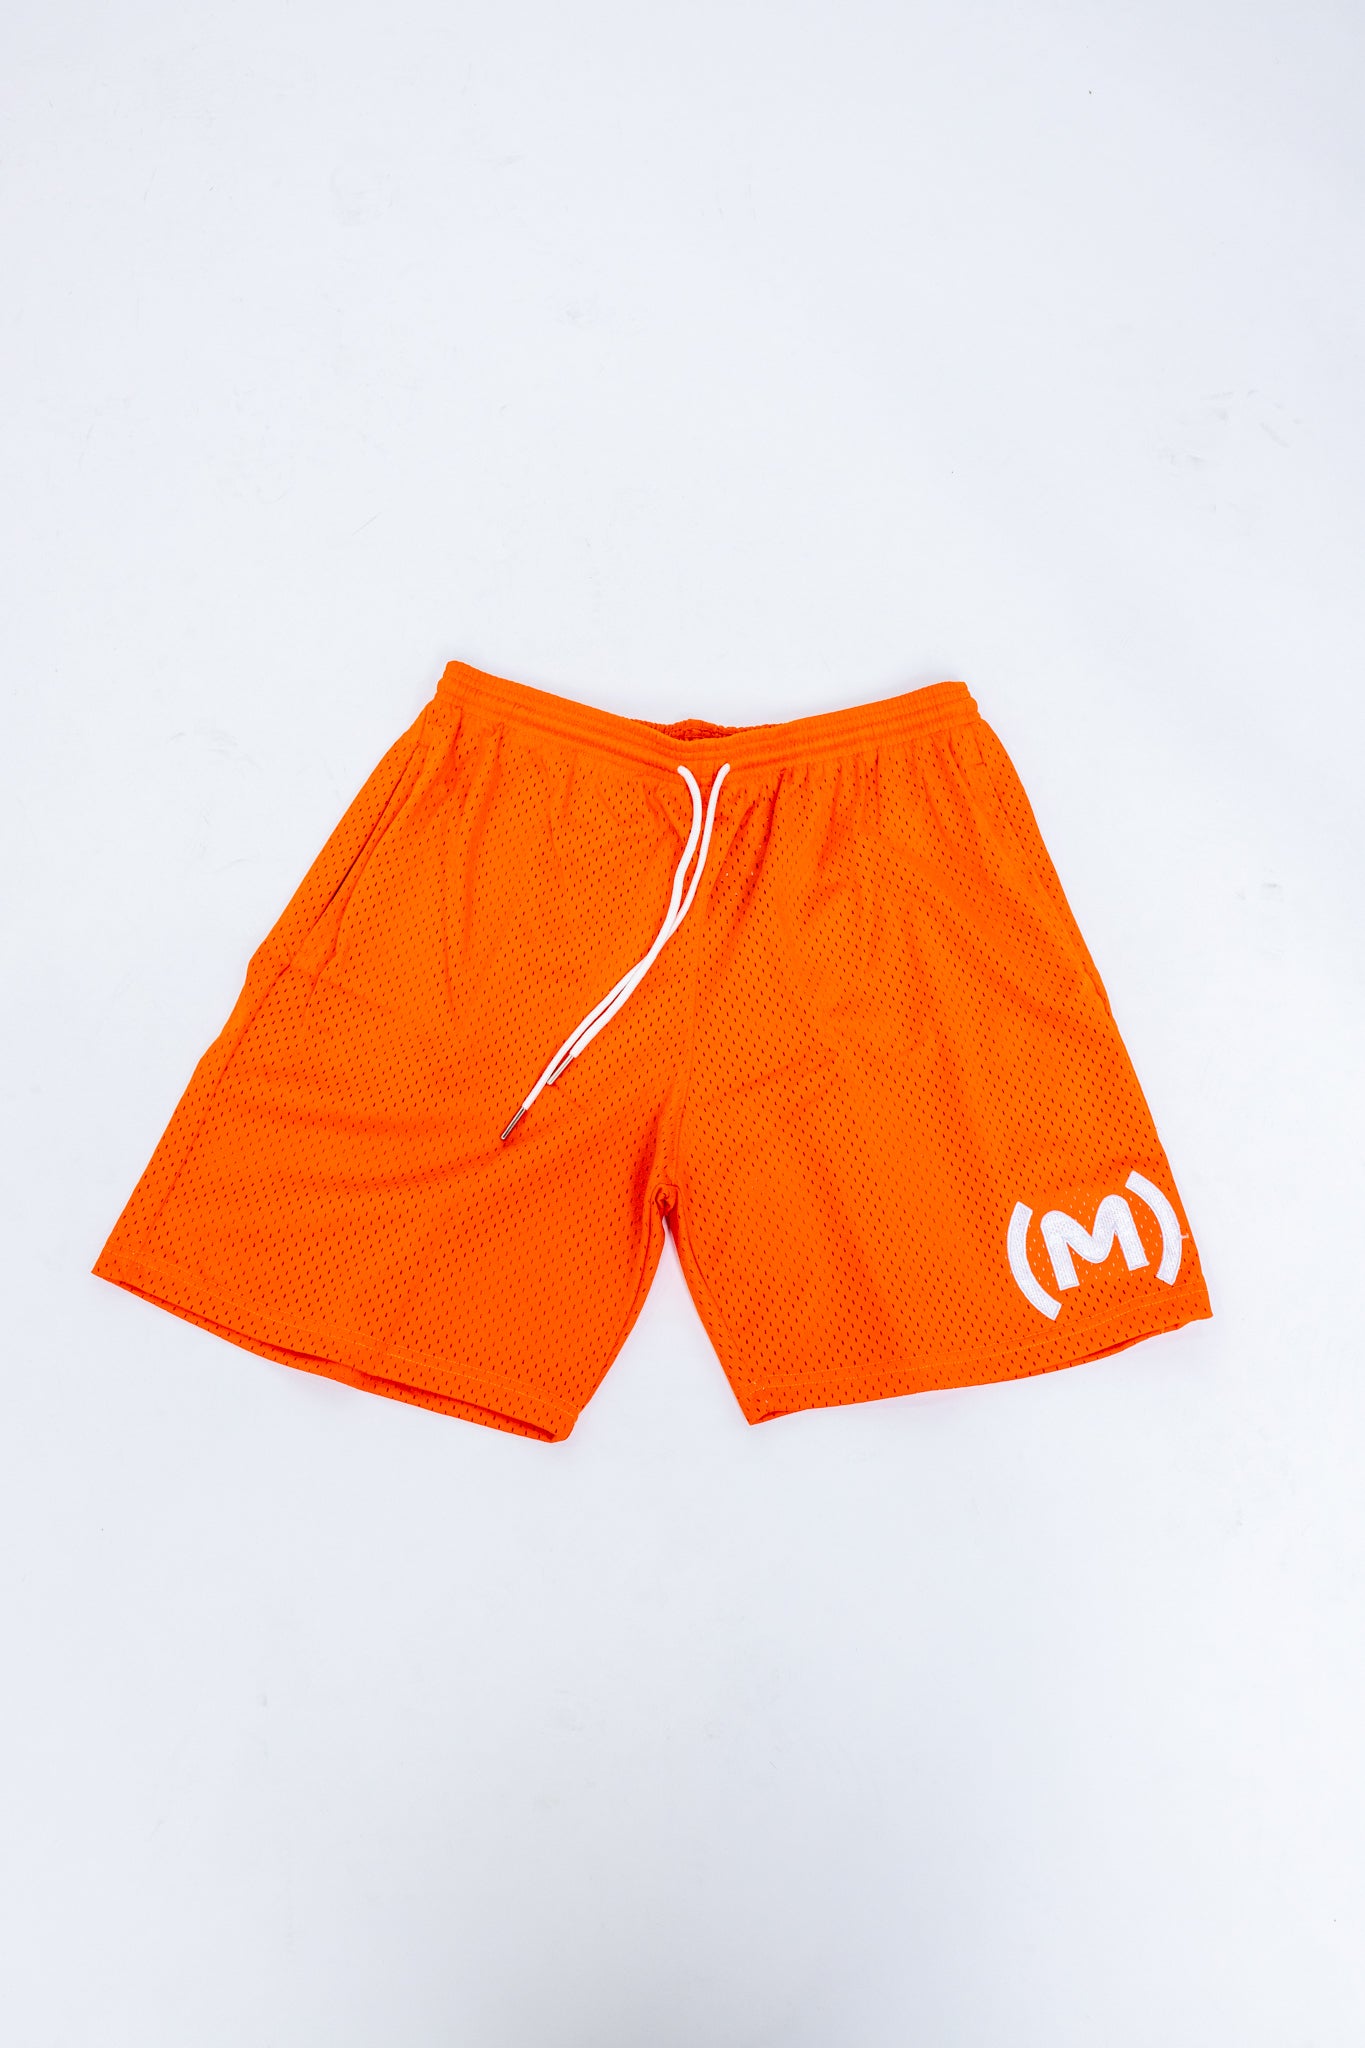 Miles52Eighty Creamsicle Mesh Shorts